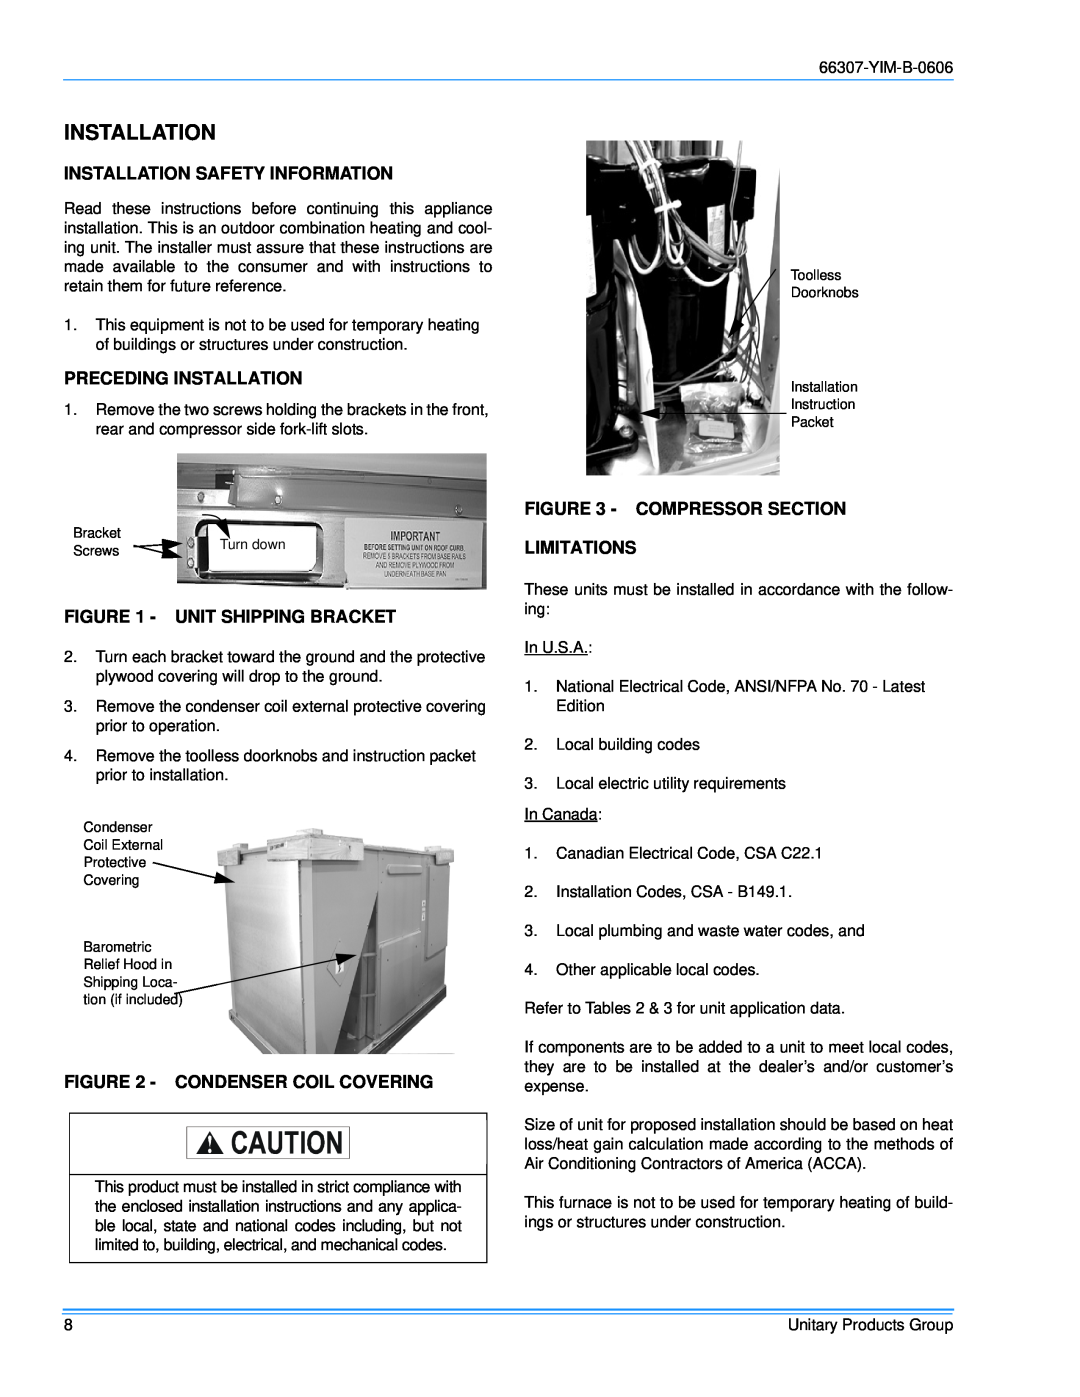 York BP 090 Installation Safety Information, Preceding Installation, Unit Shipping Bracket, Condenser Coil Covering 